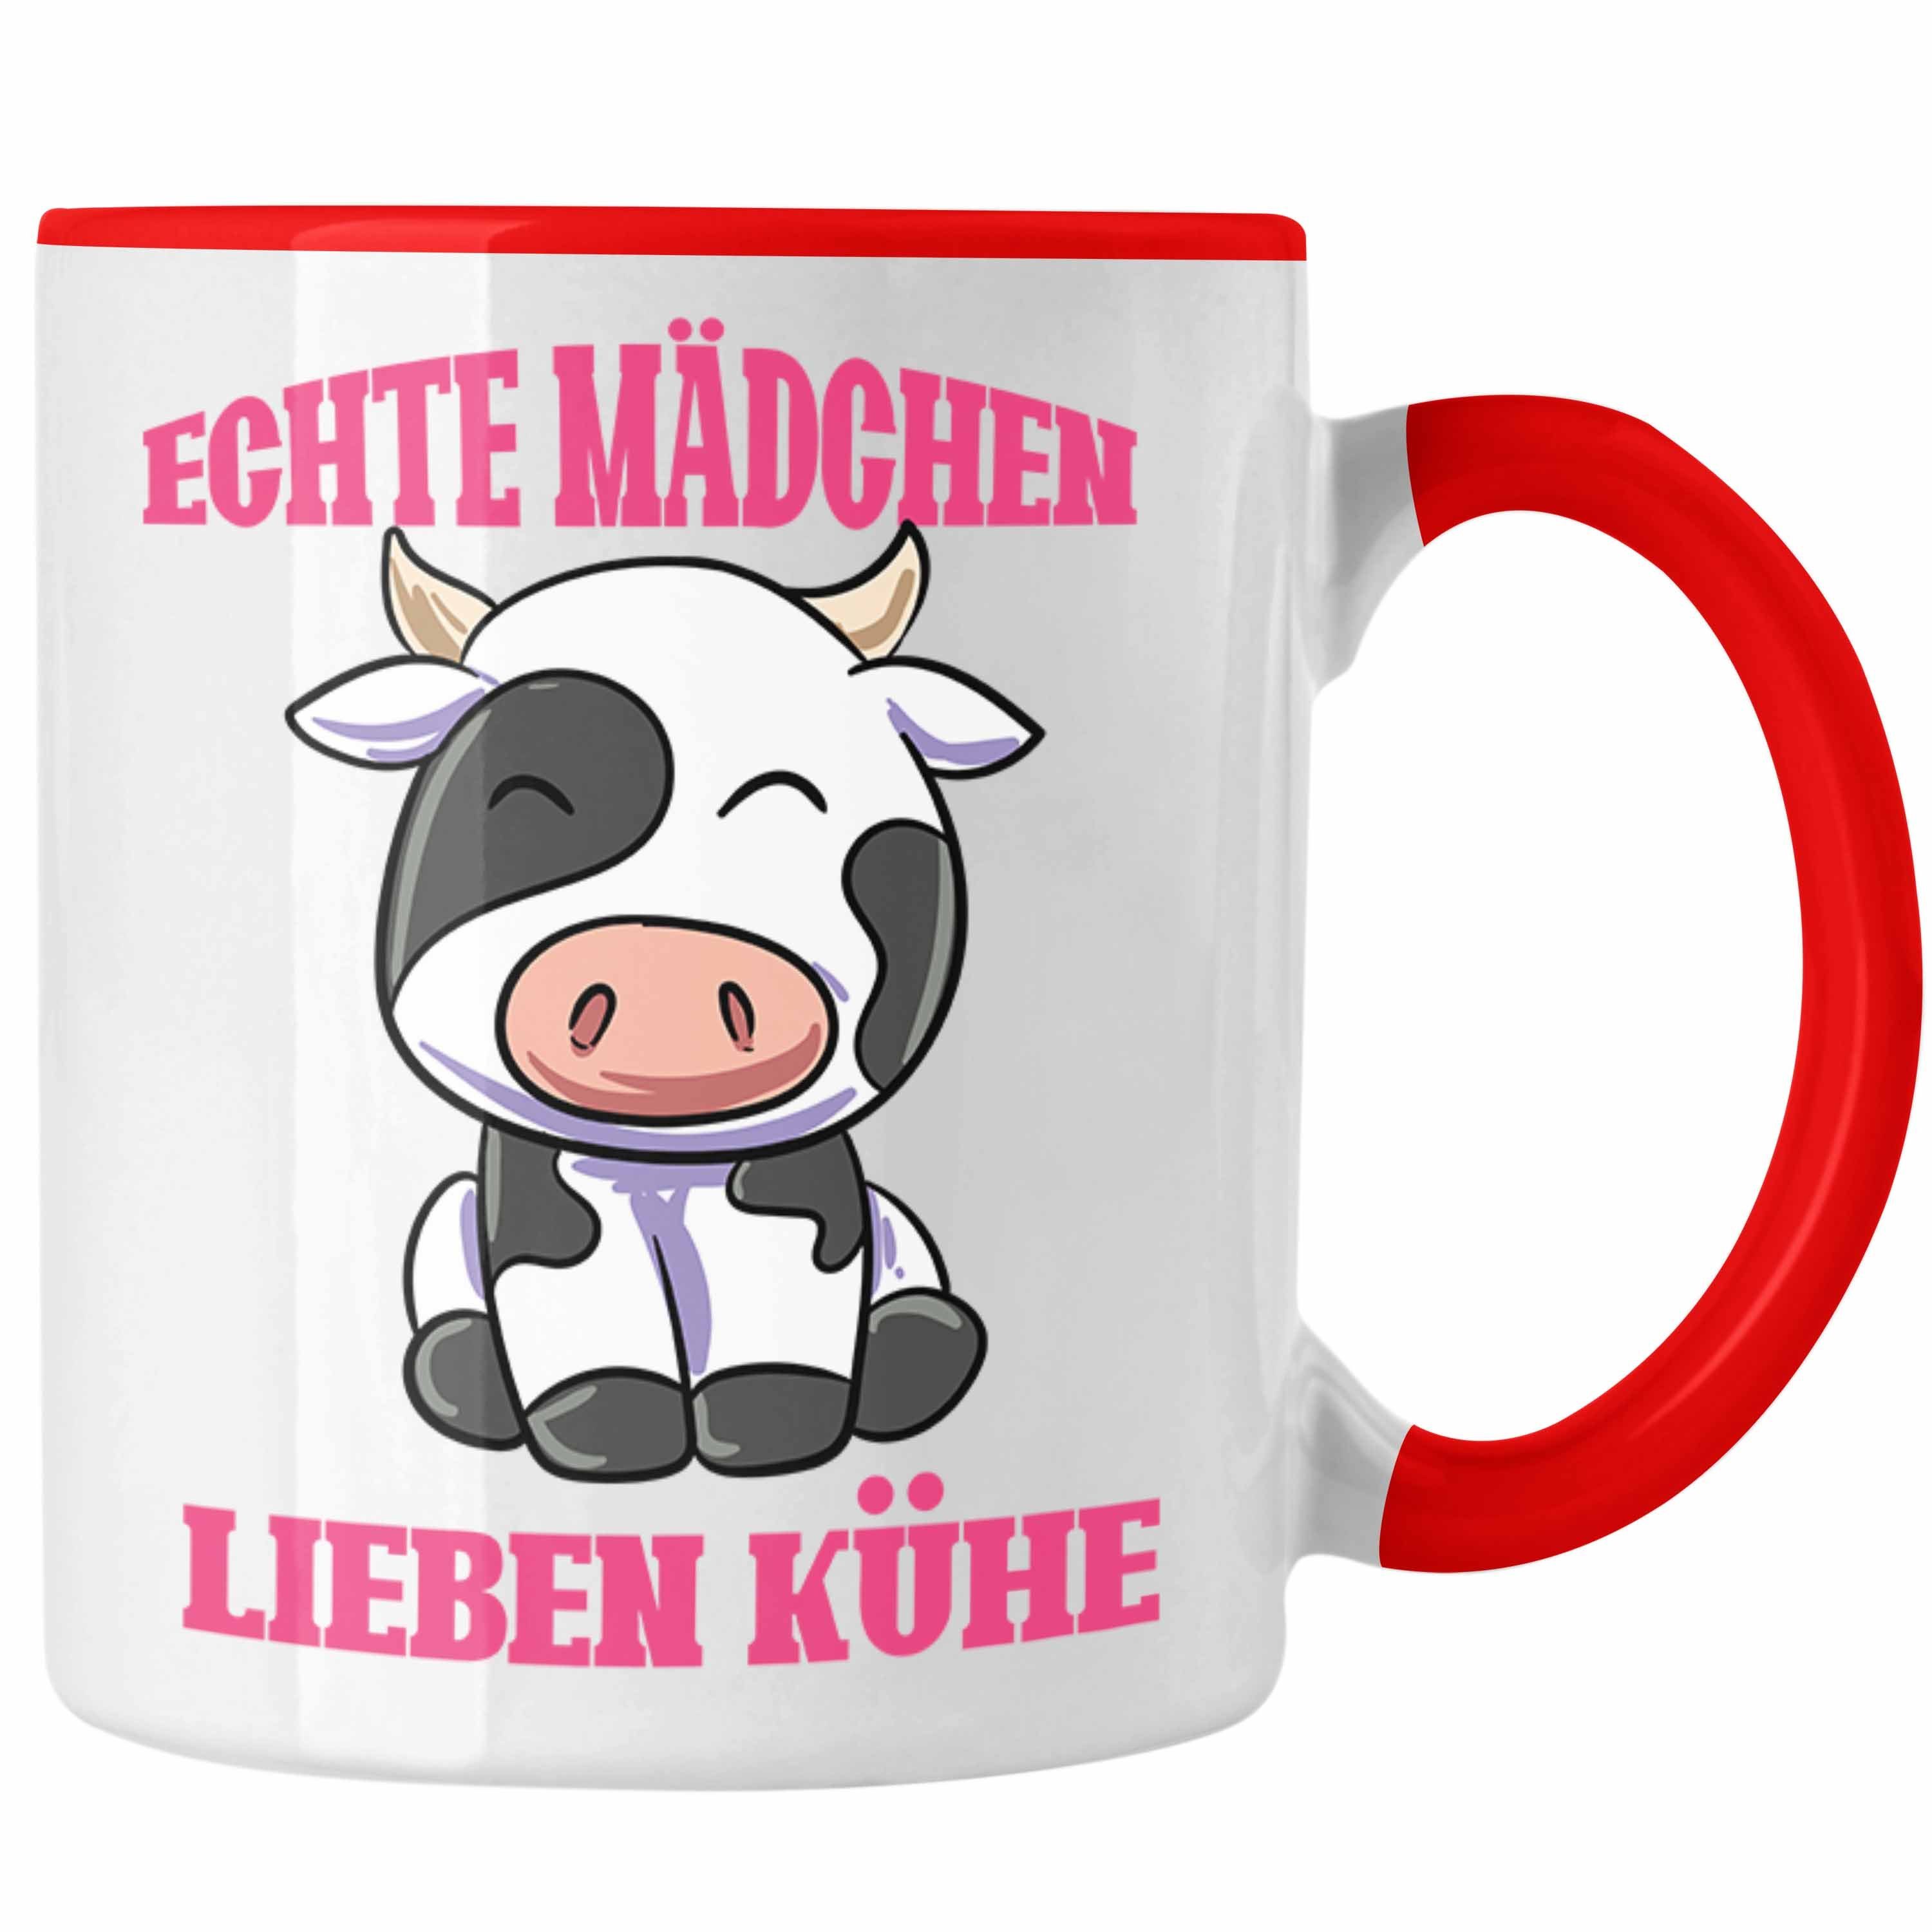 Trendation Tasse Kuh Tasse Geschenk Echte Mädchen Lieben Kühe Landwirtin Bäuerin Gesch Rot